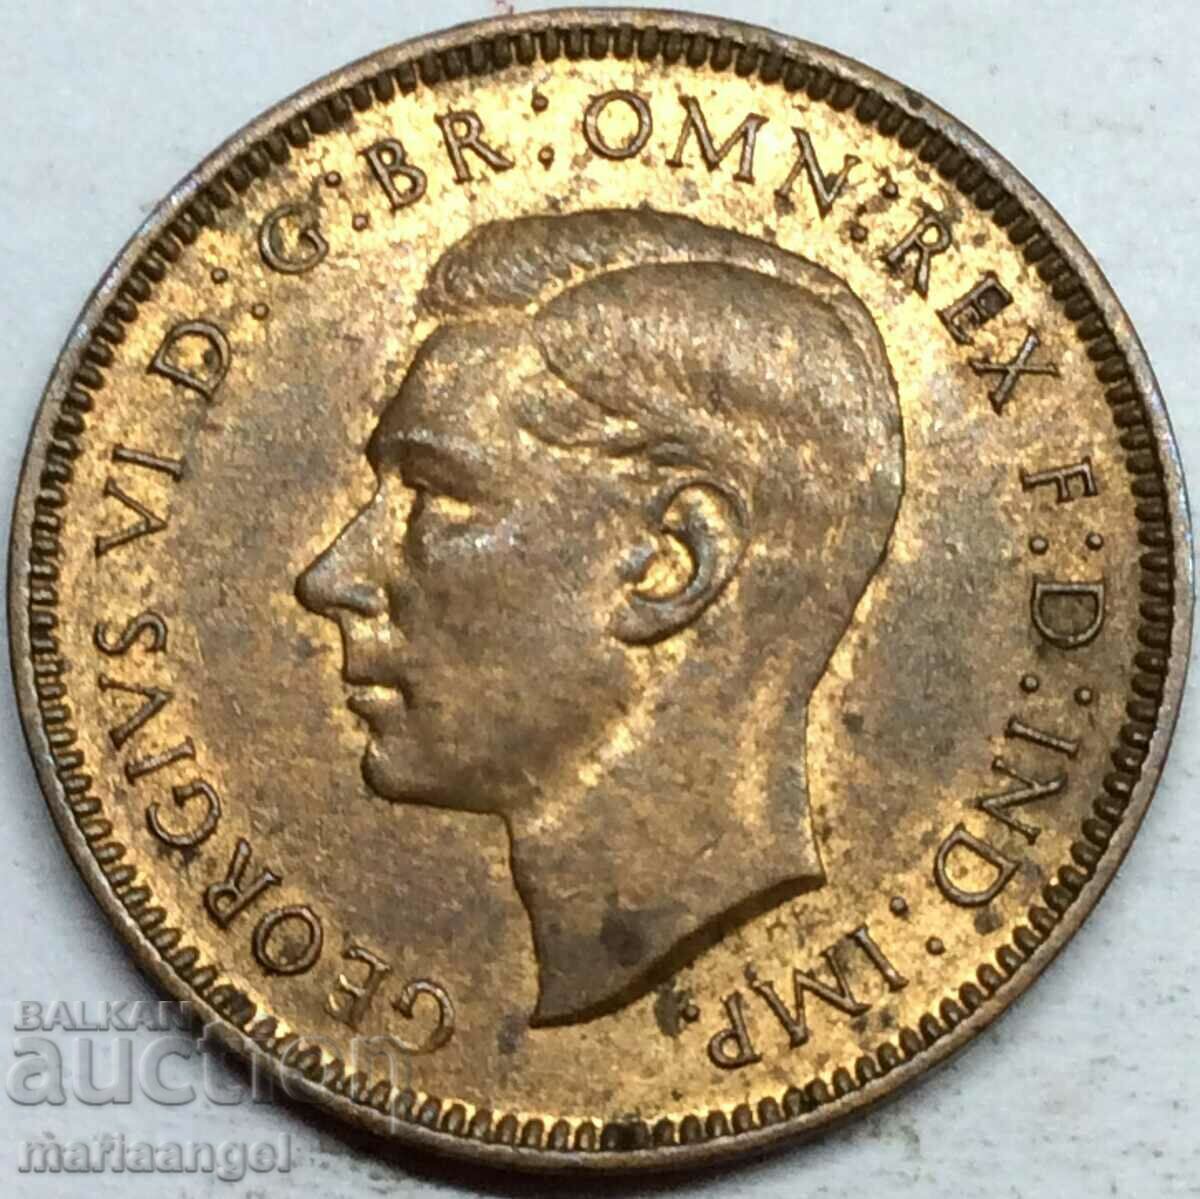 Великобритания 1 фартинг 1947 бронз